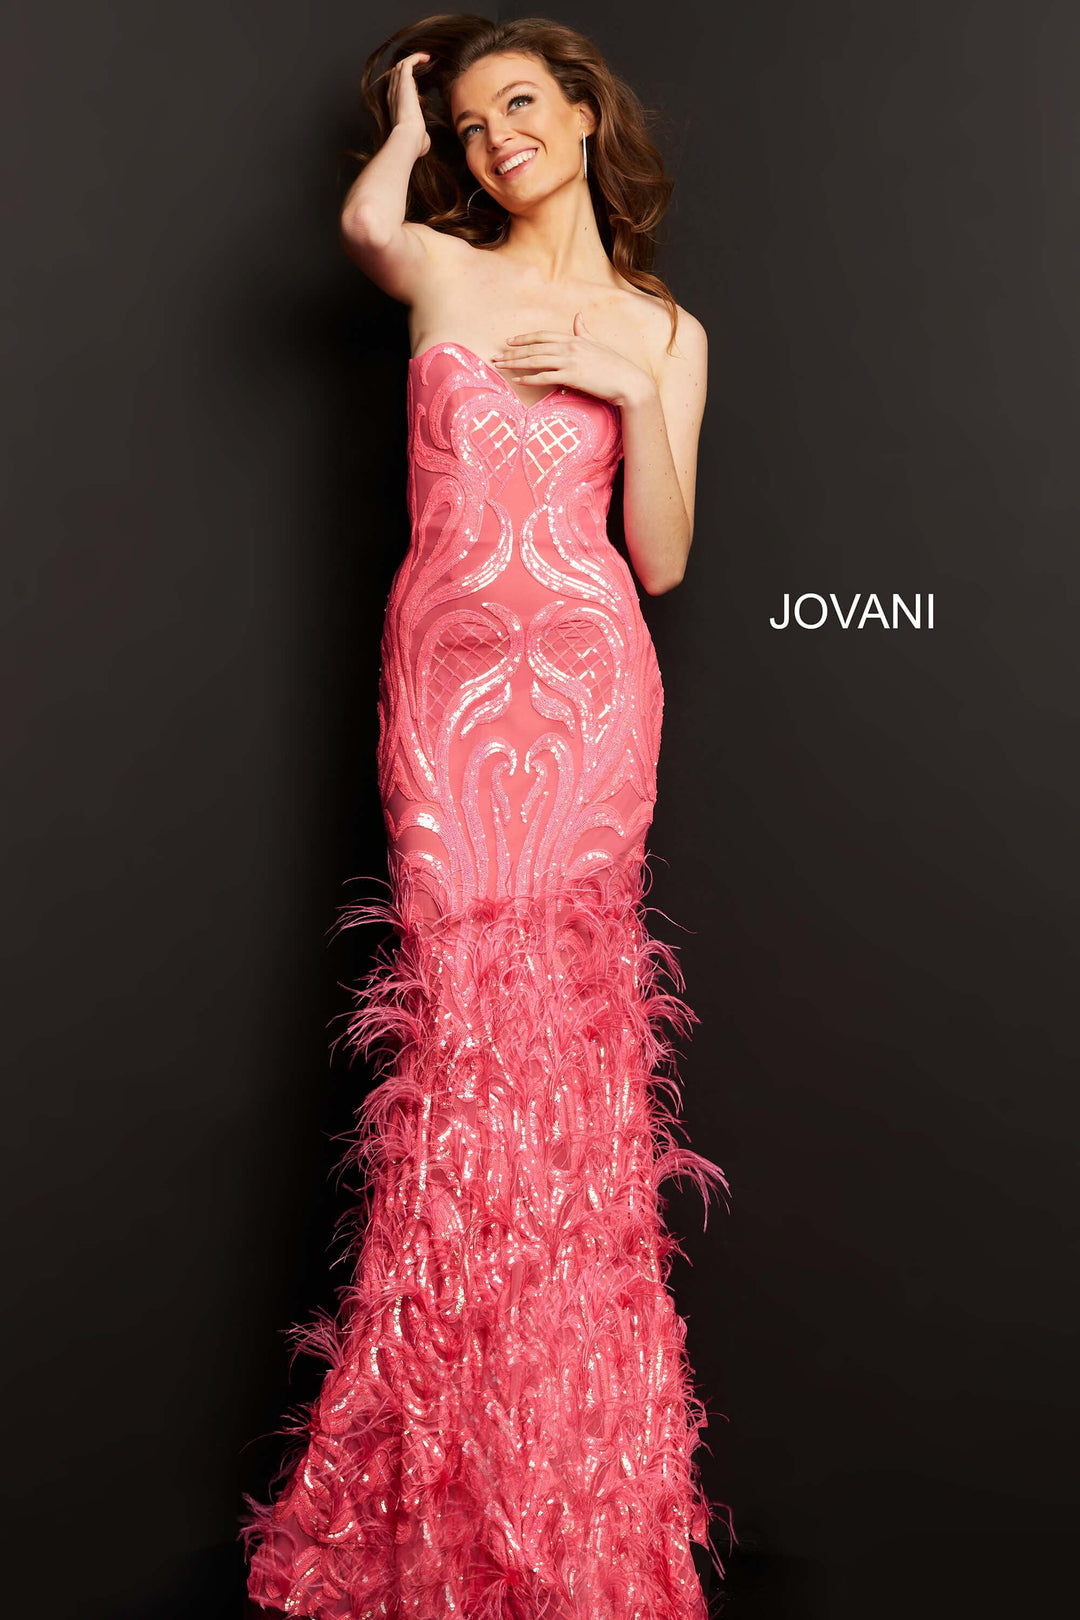 Jovani 5667 Dress - FOSTANI